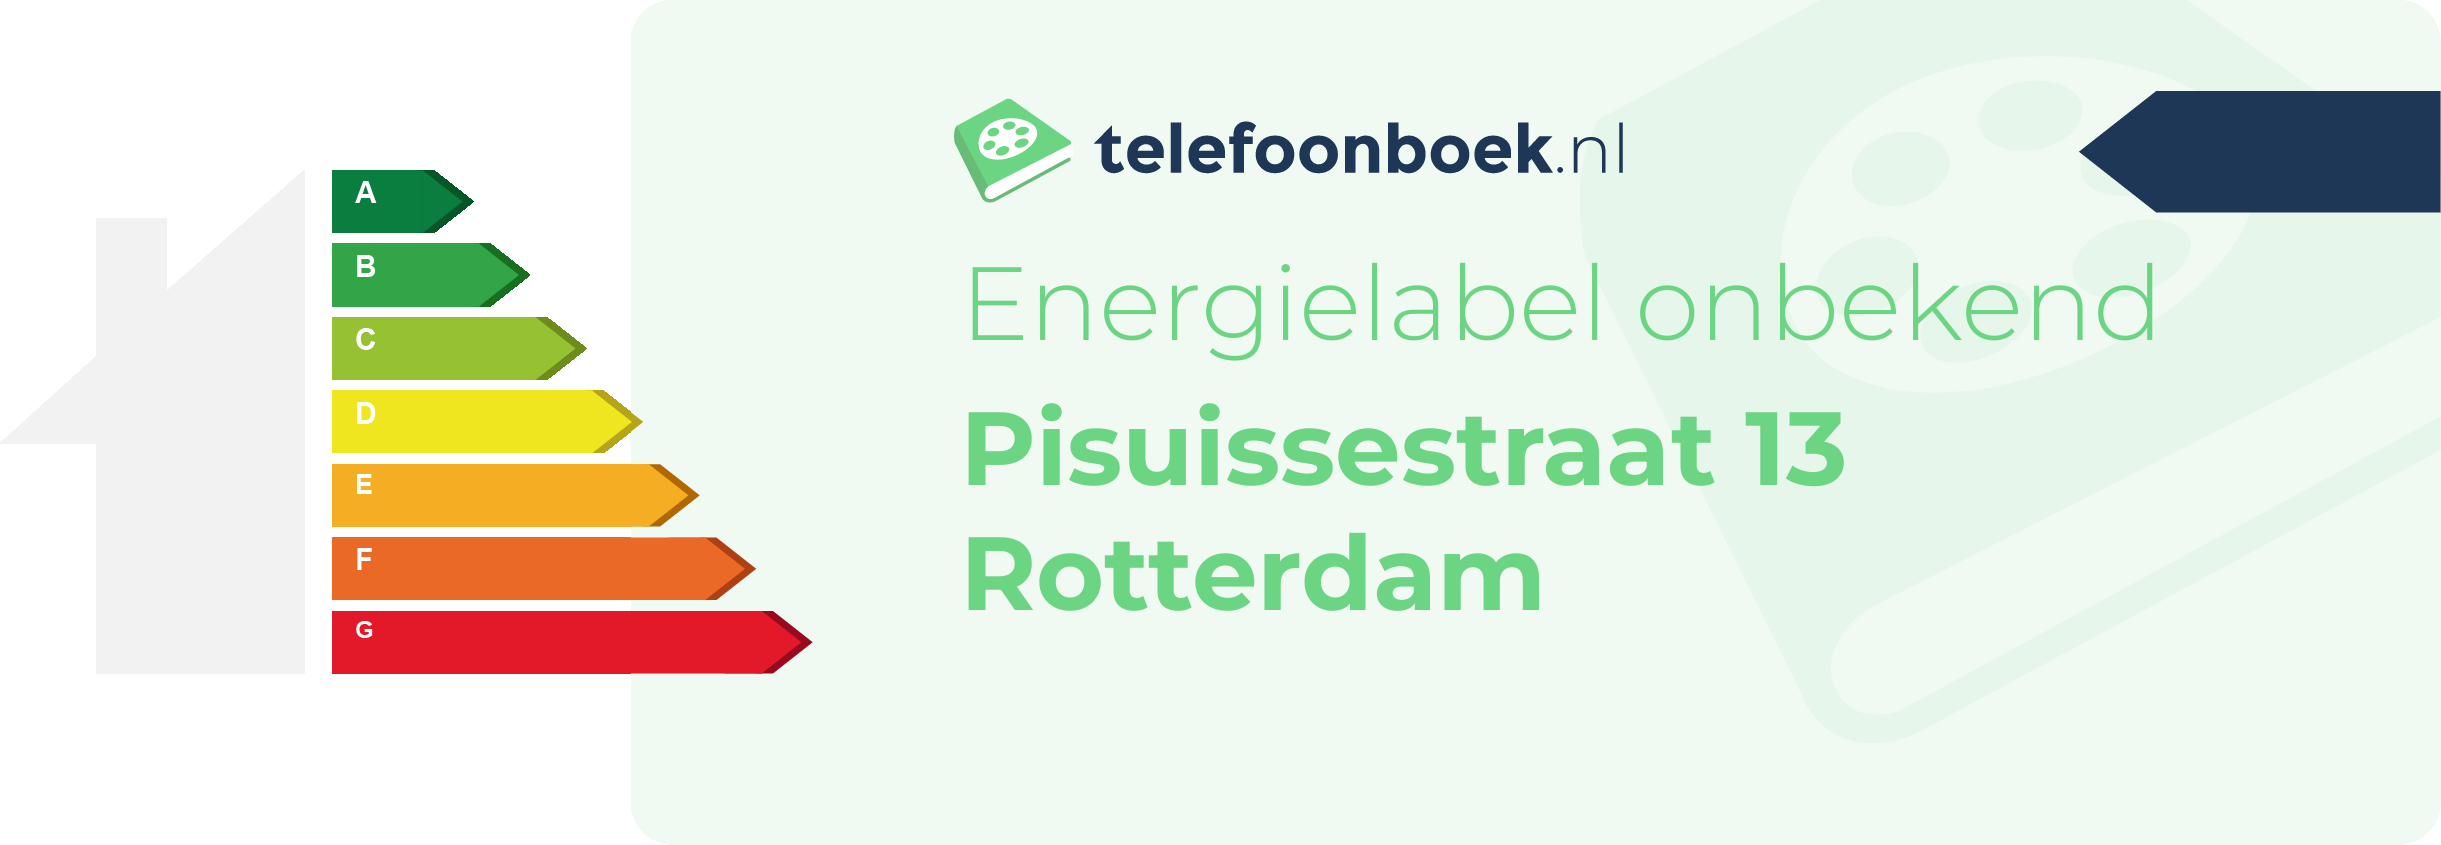 Energielabel Pisuissestraat 13 Rotterdam